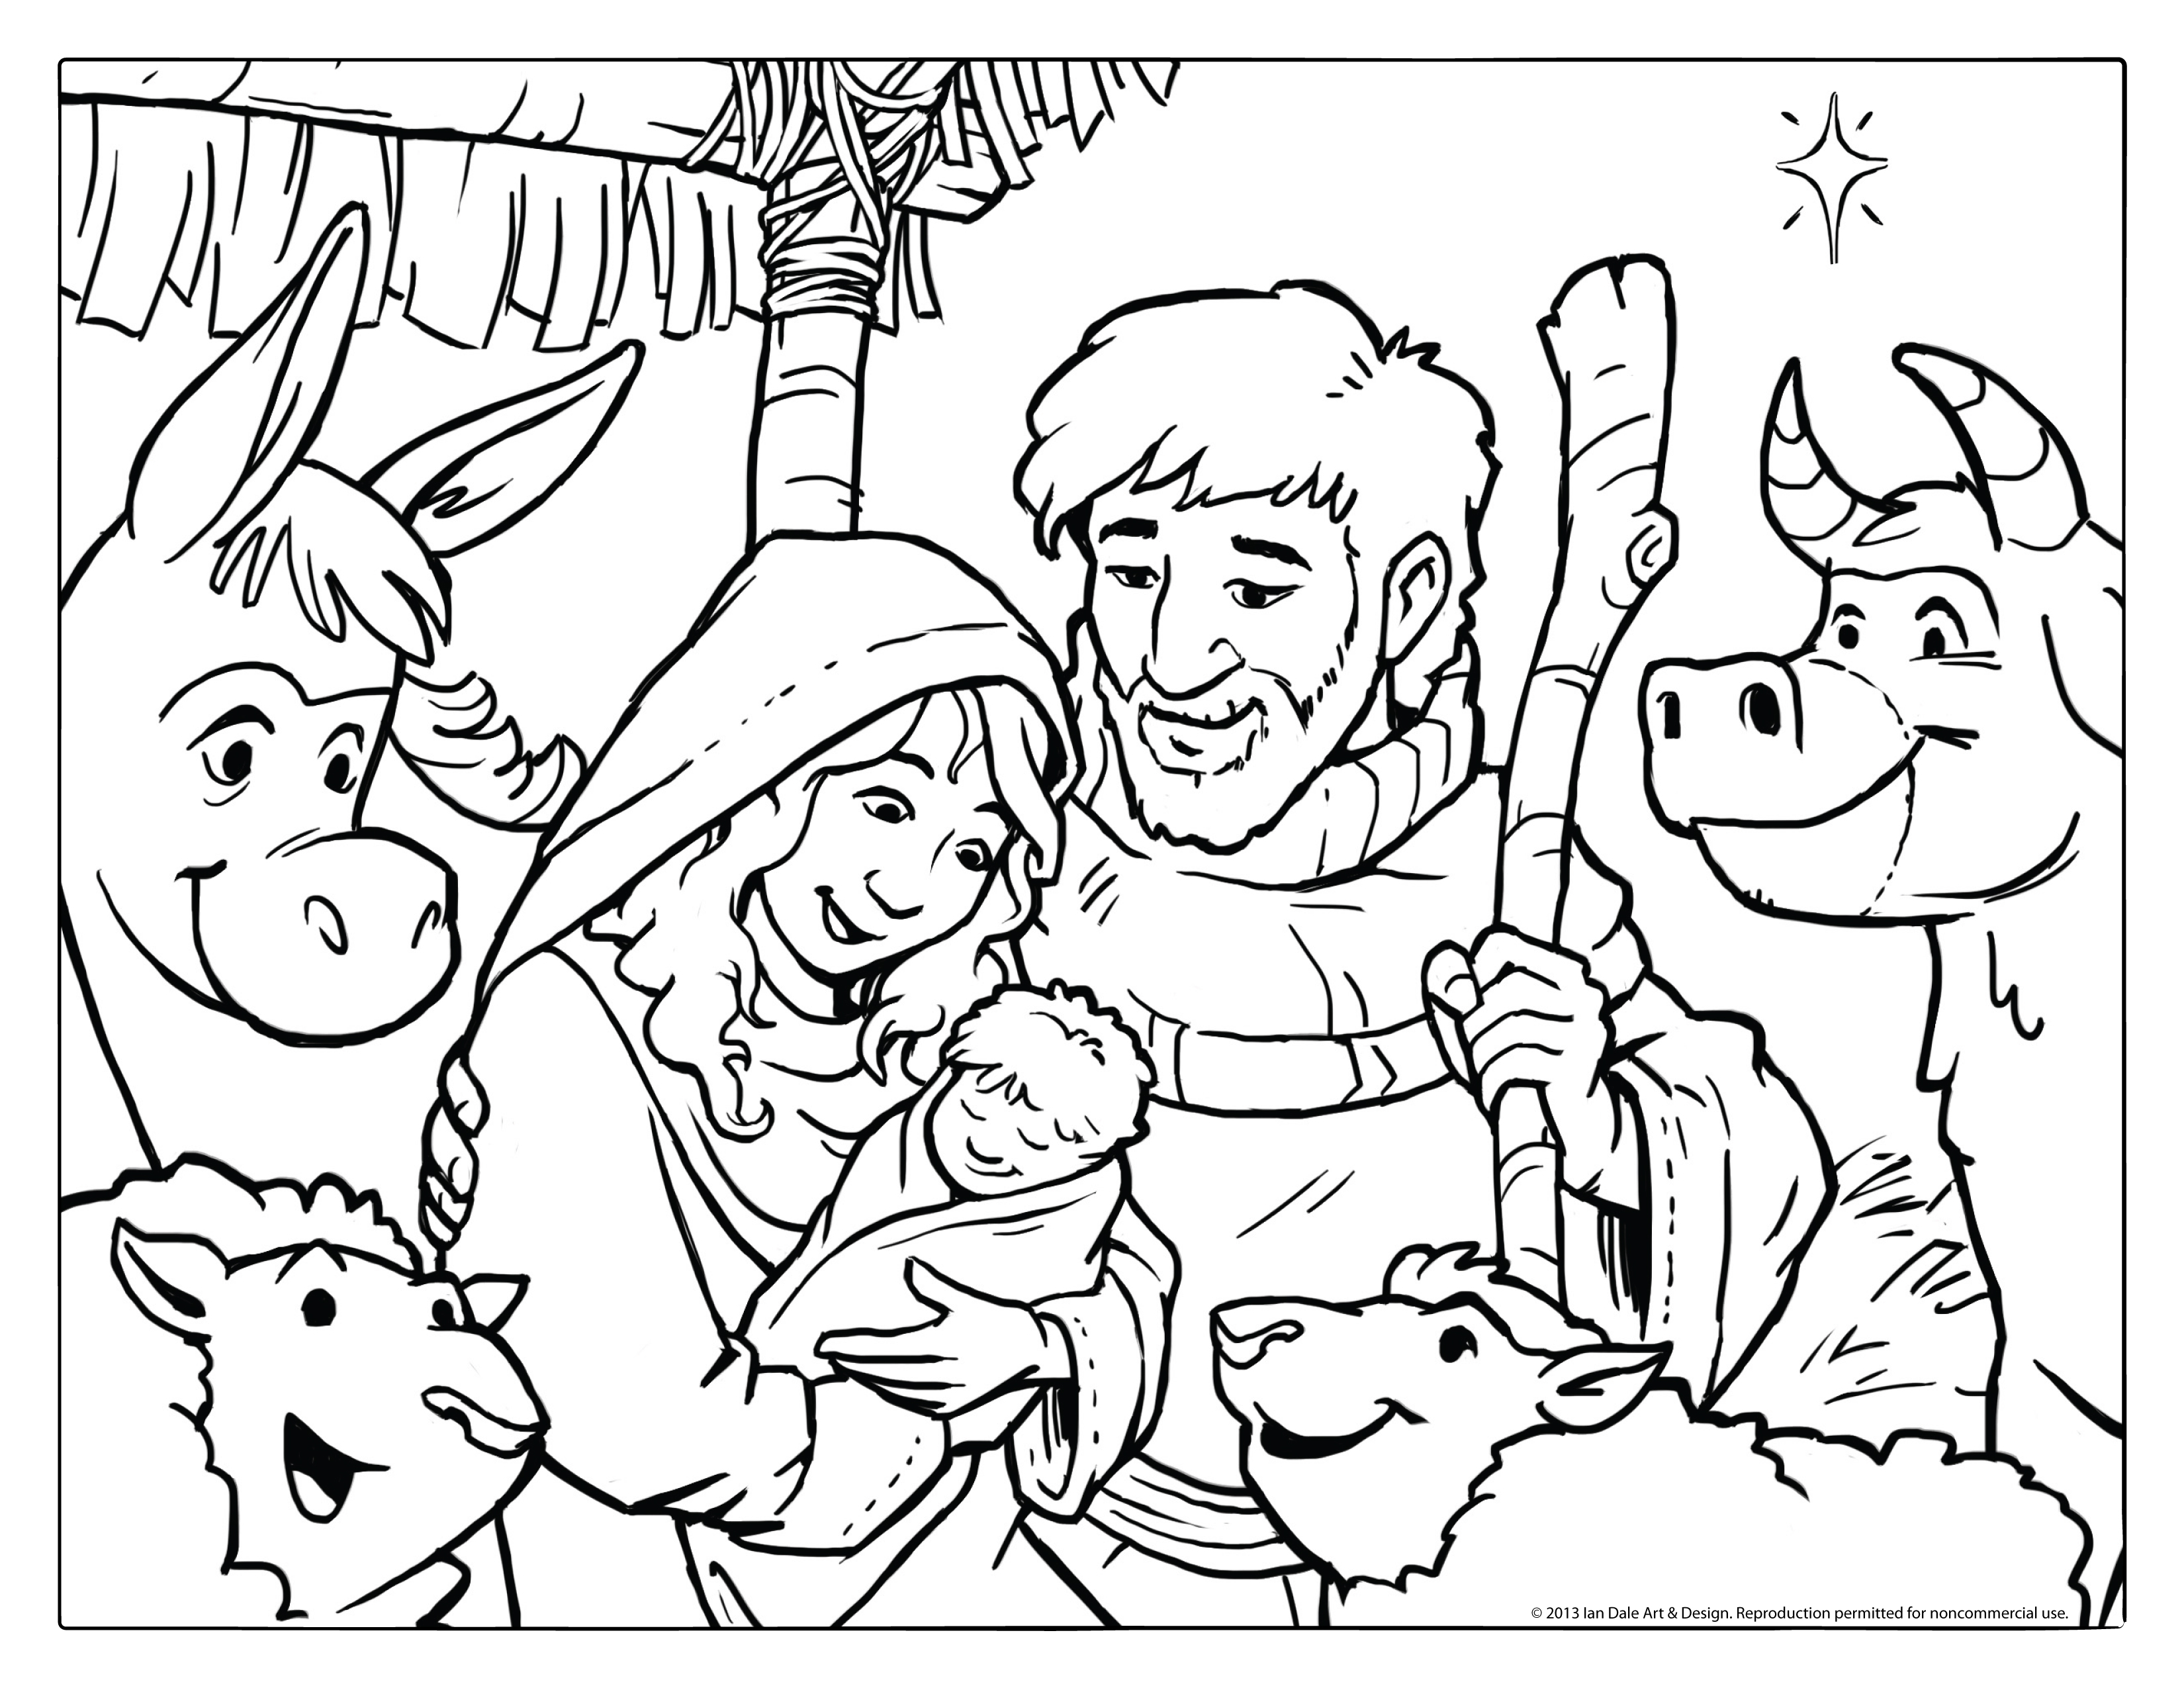 Ian Dale Art & Design | Blog: Christmas Nativity Scene - Free Printable  Coloring Page